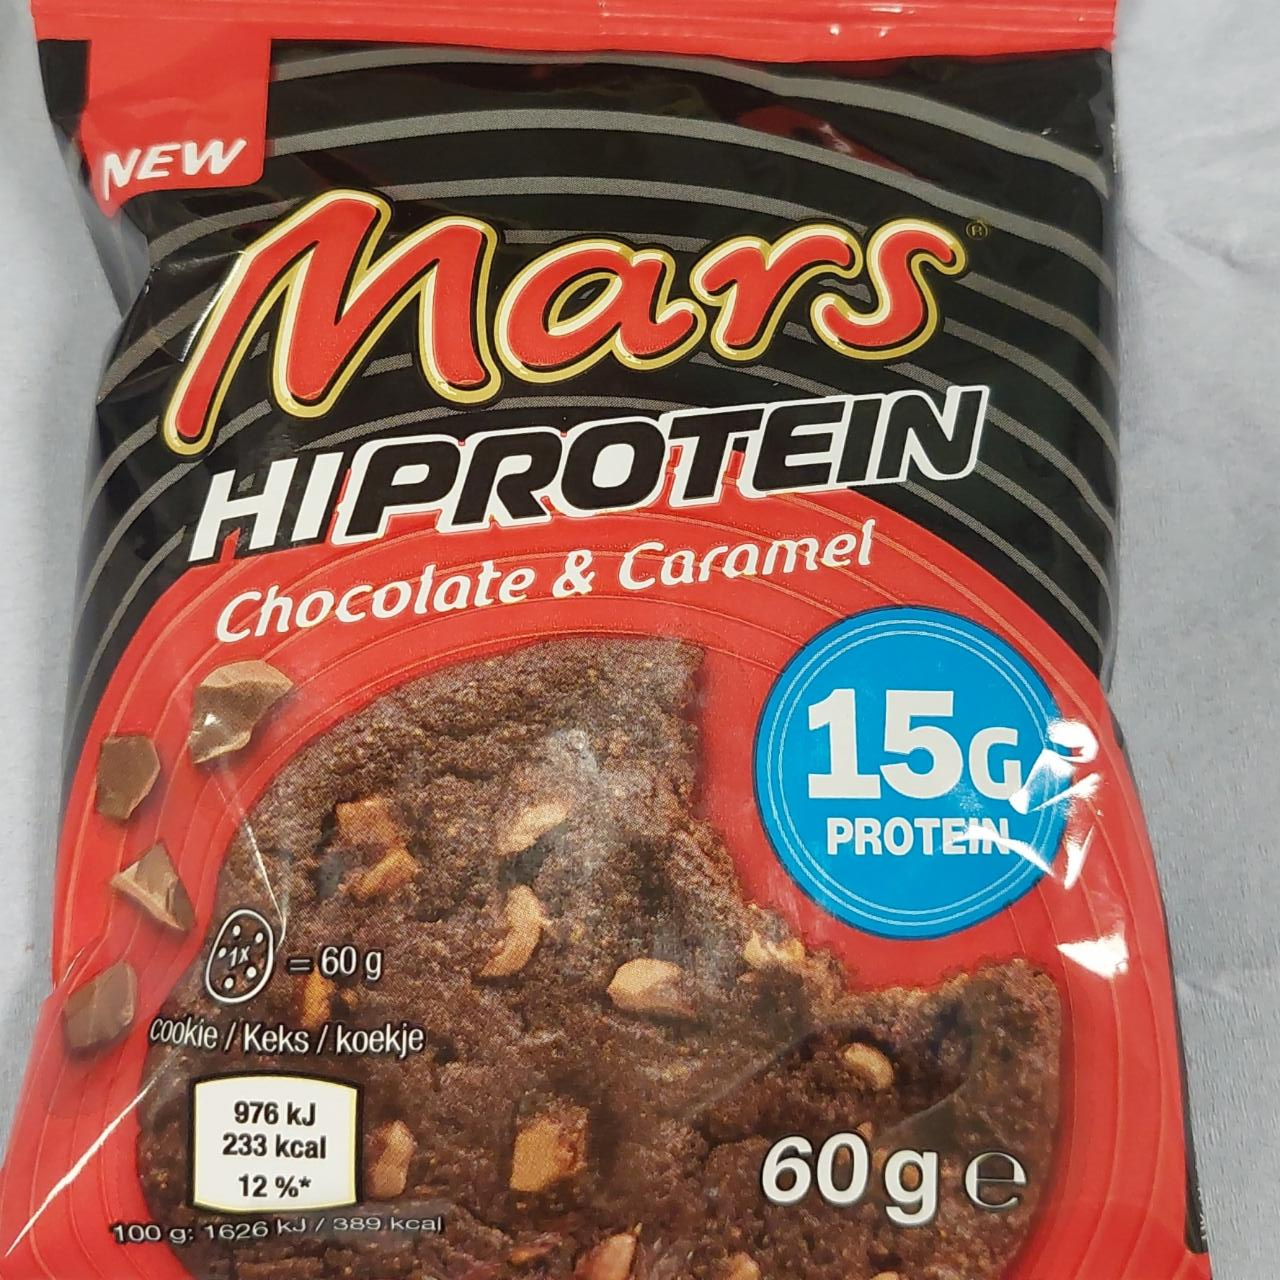 Zdjęcia - Hi-Protein Cookie Chocolate & Caramel Mars